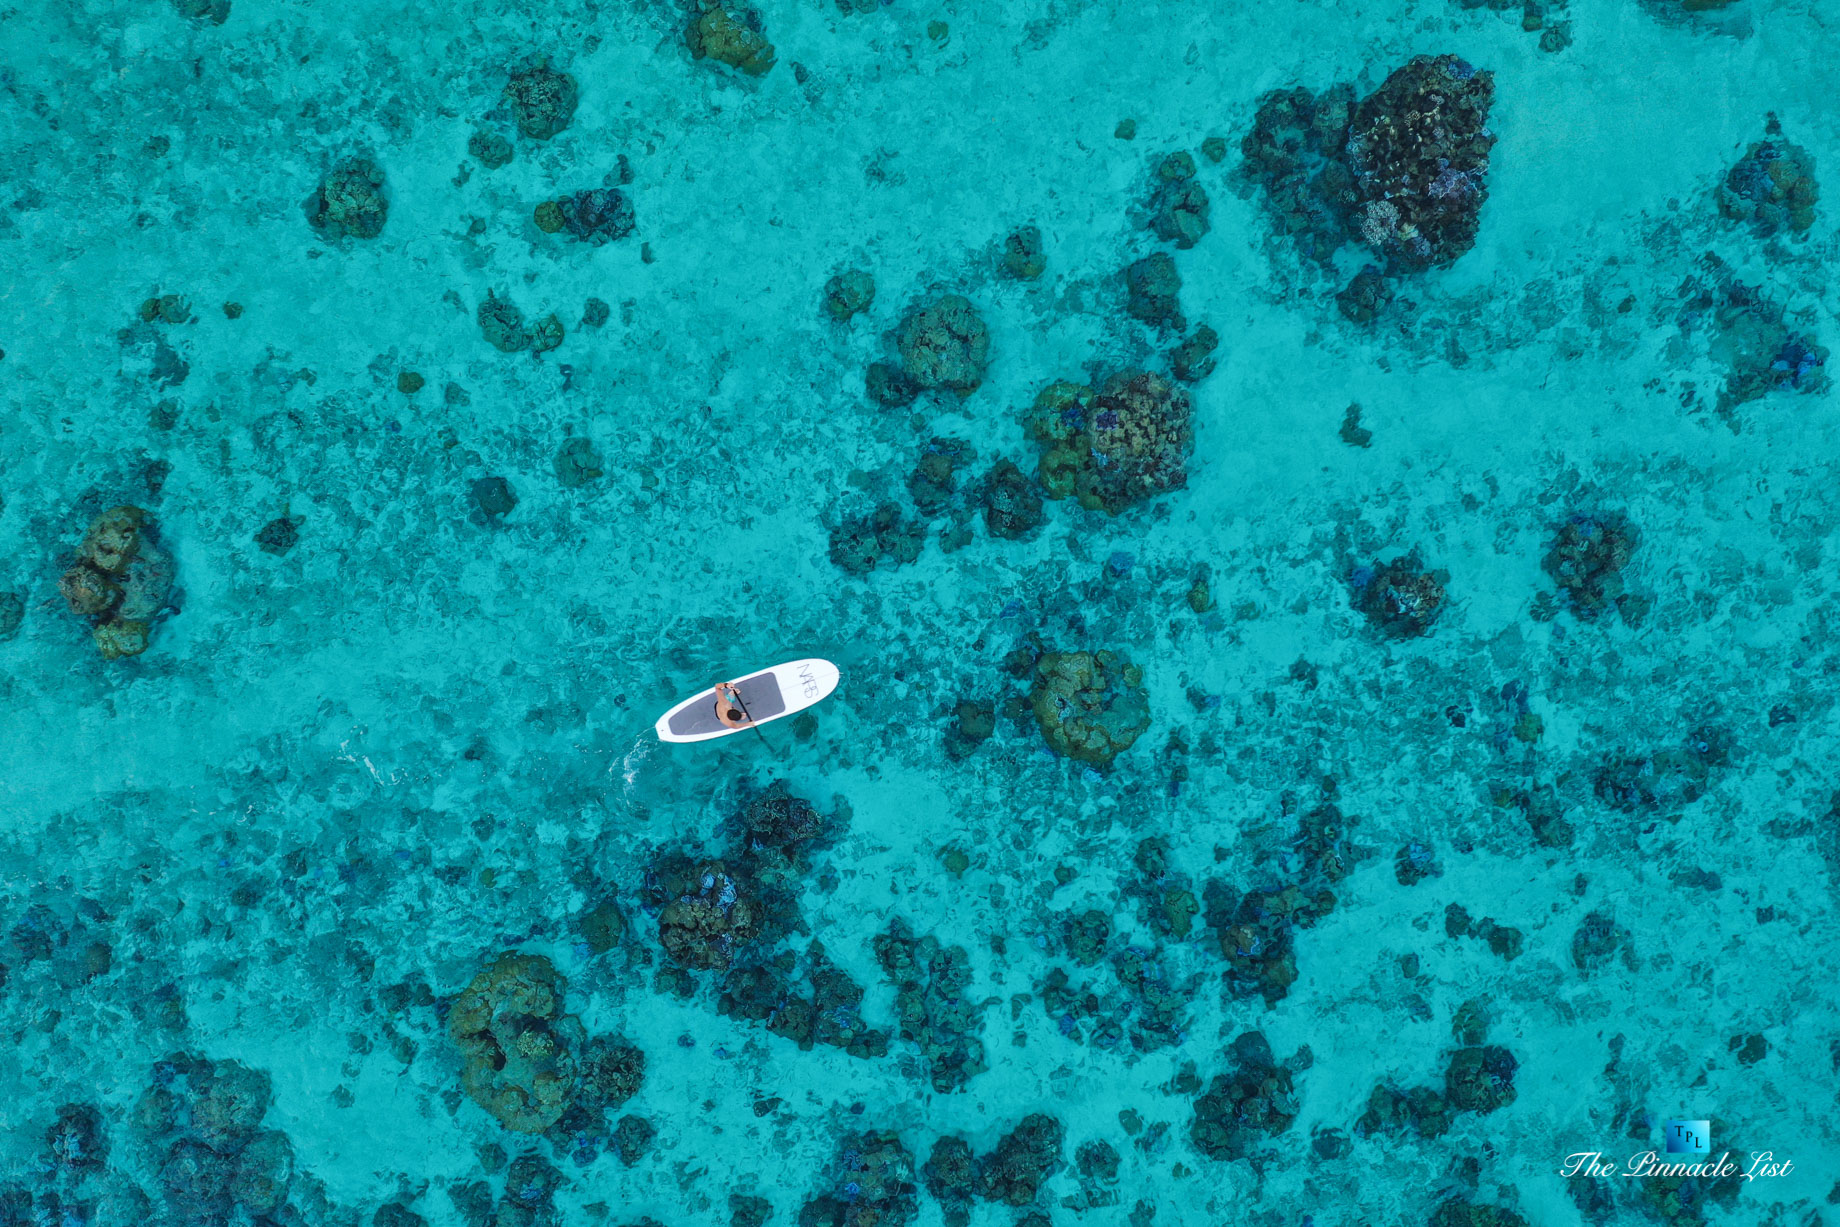 Motu Tane Private Island – Bora Bora, French Polynesia